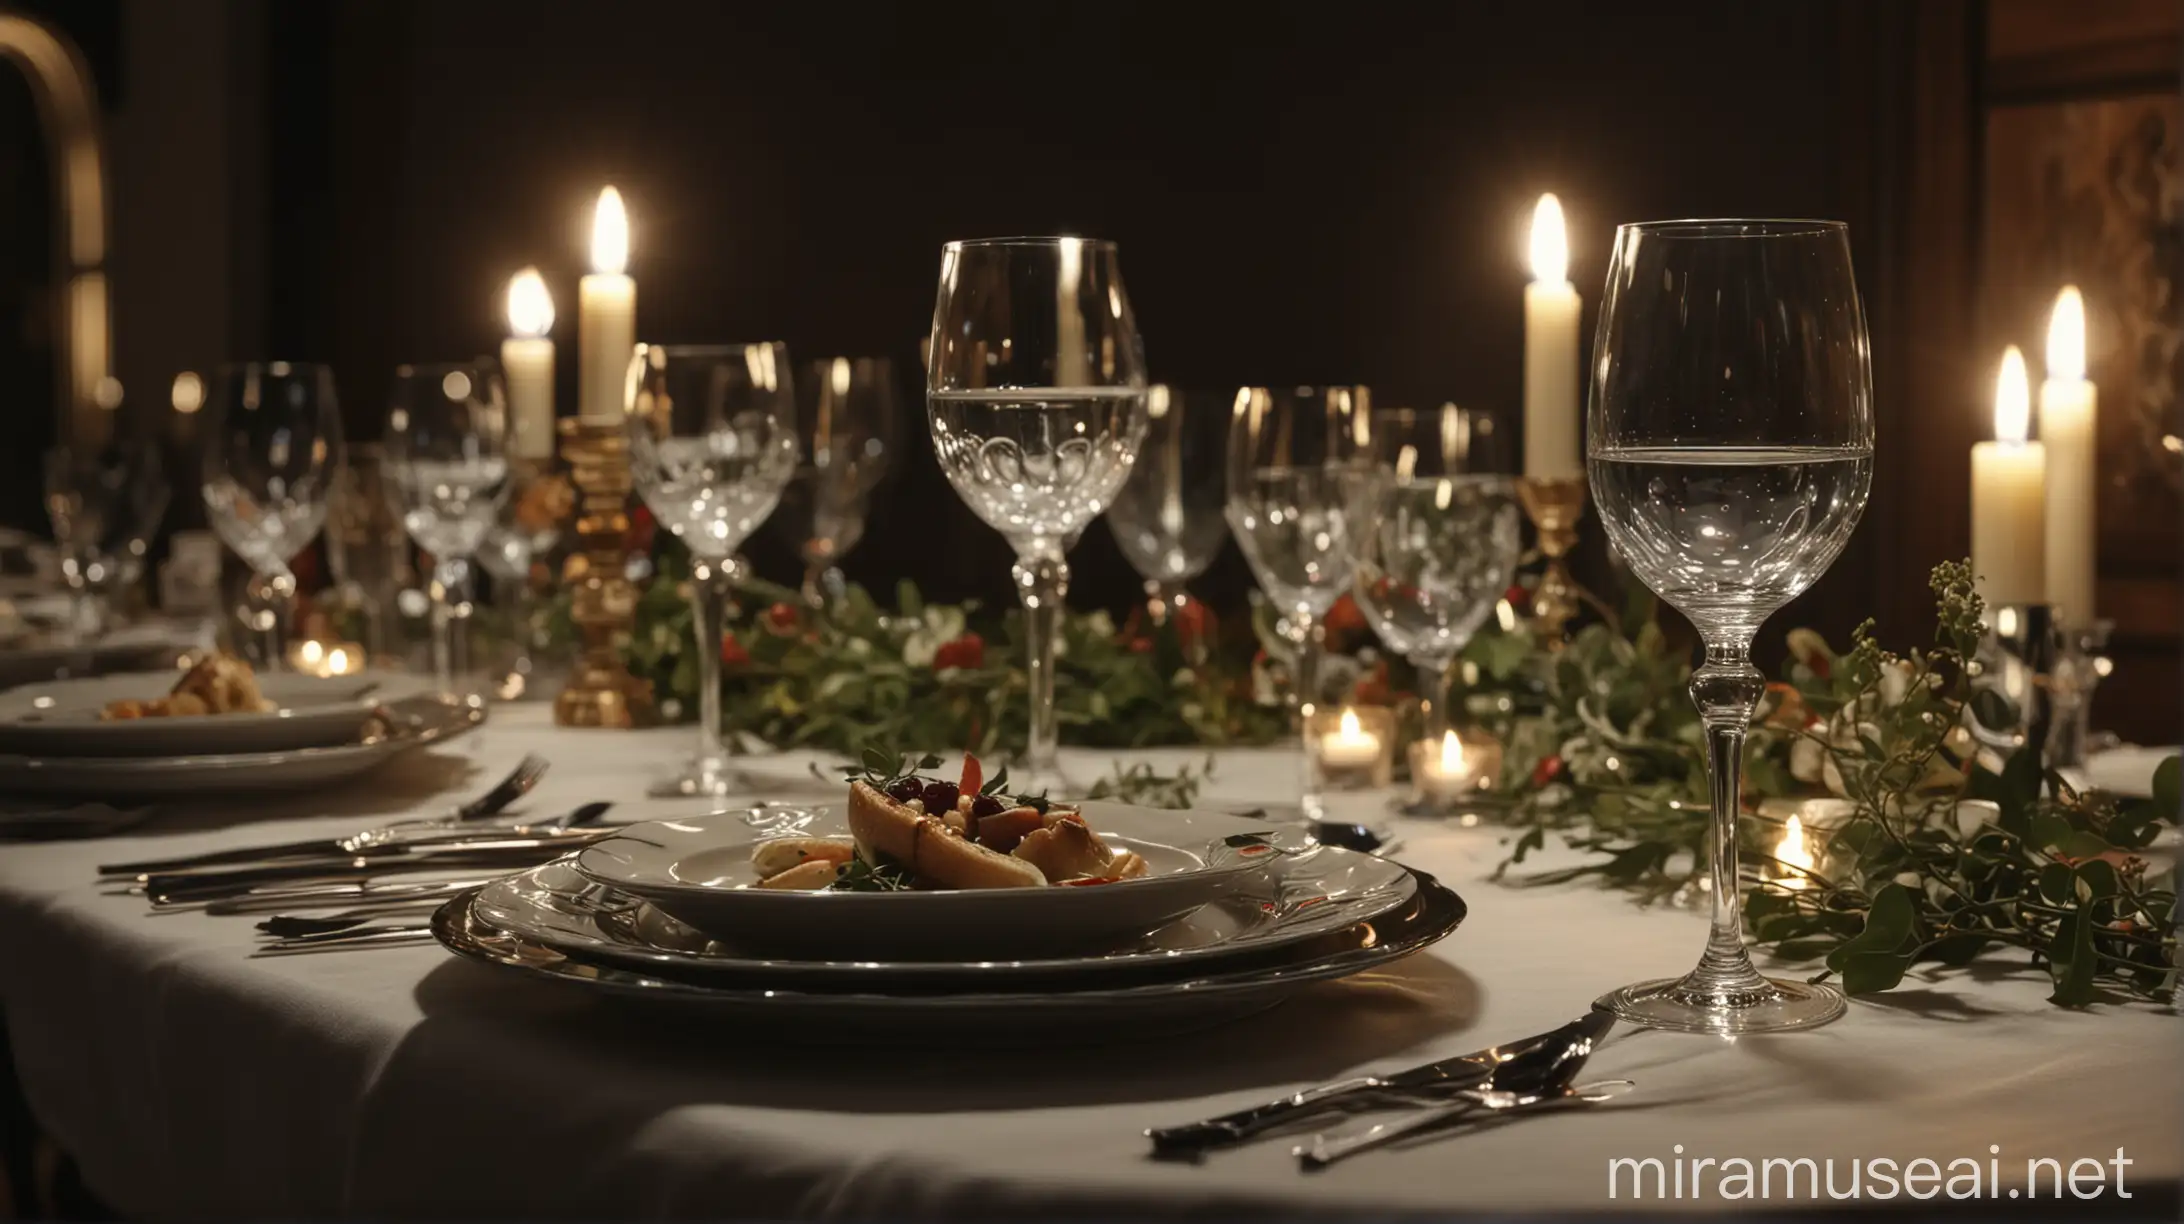 Elegant Dinner Table Setting CloseUp View in Dim Evening Light